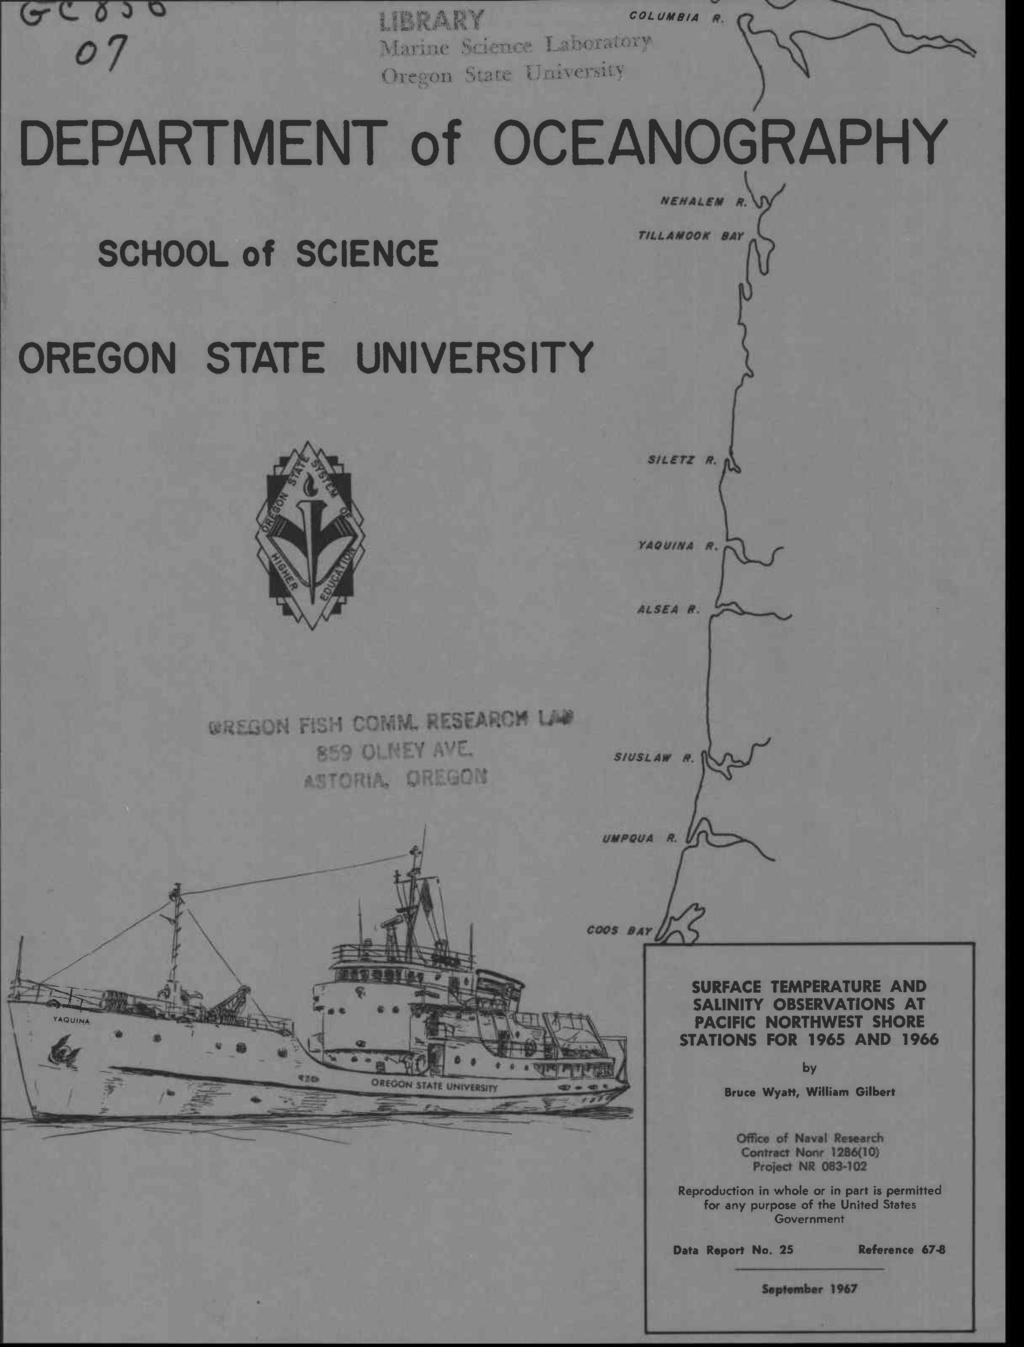 (7- C. 6 ) COL LIMB/4 R, 0 7 Njorine Oregon 11:\iiver;inv DEPARTMENT of OCEANOGRAPHY SCHOOL of SCIENCE OREGON STATE UNIVERSITY wrezon FISK COMM, RESEARCH LA 89 OLNEY AVE.